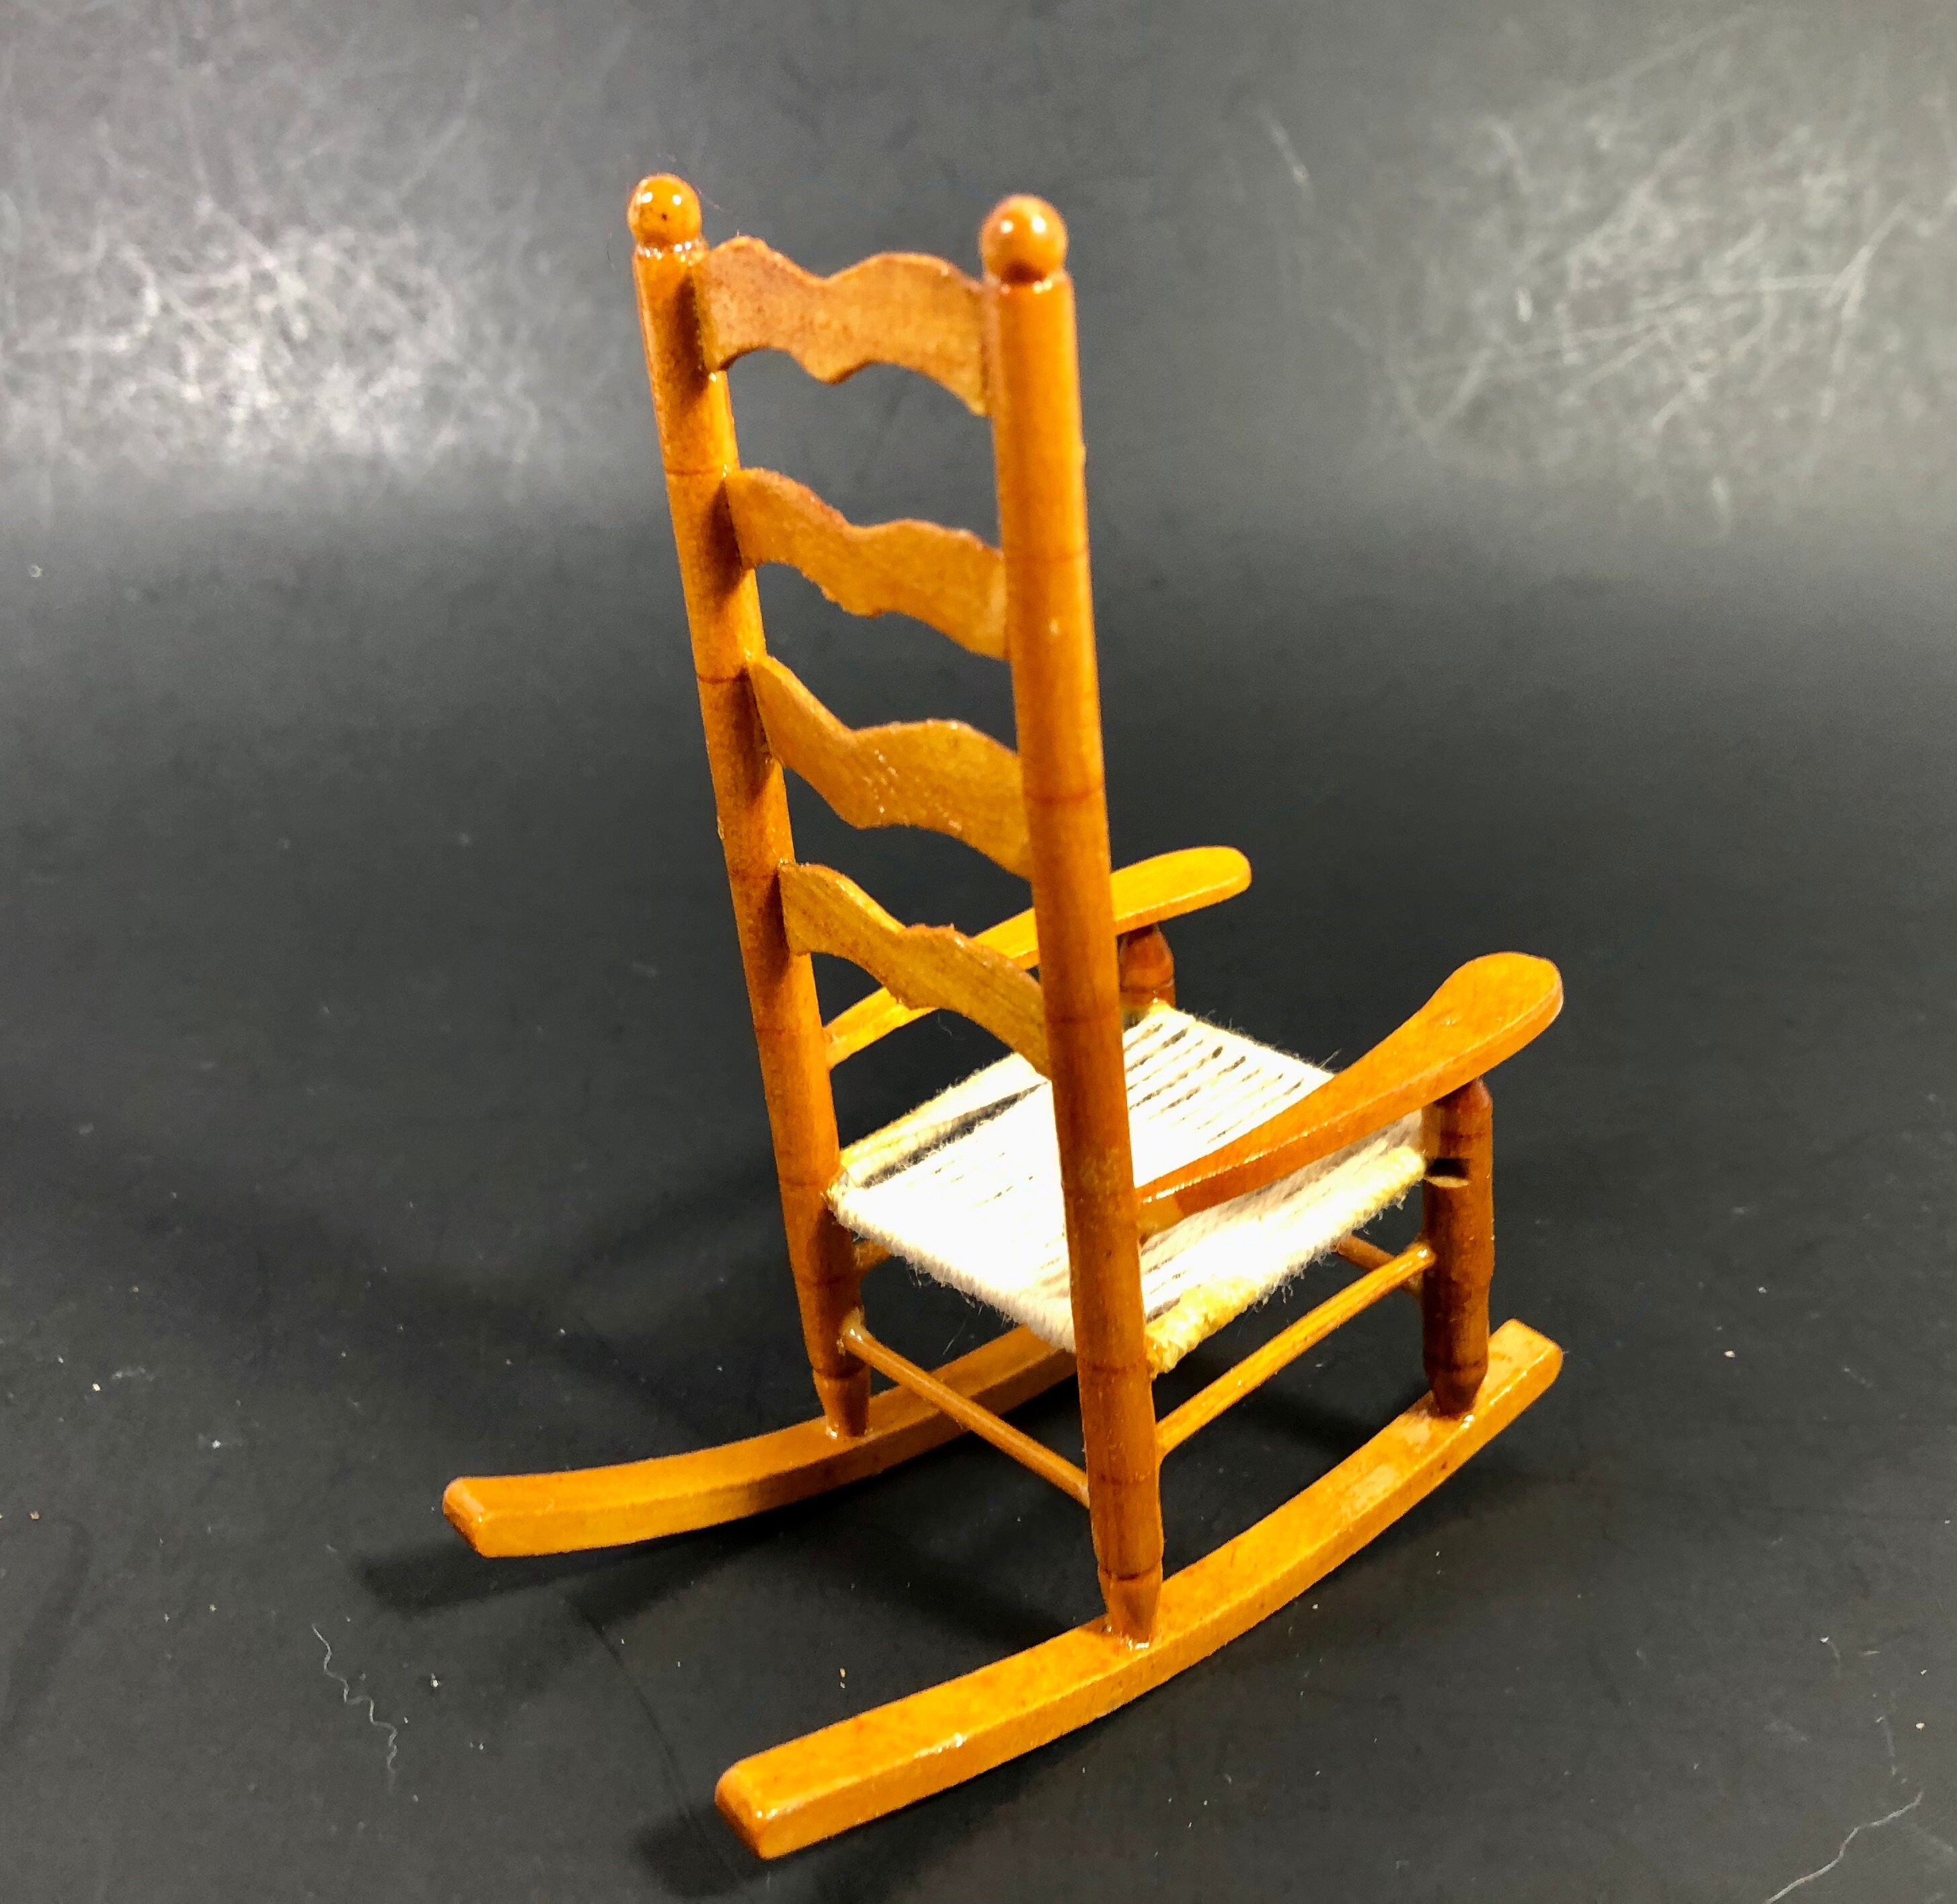 Woven Seat Rocking Chair 1.733/0  miniature dollhouse furniture wooden  rocker 